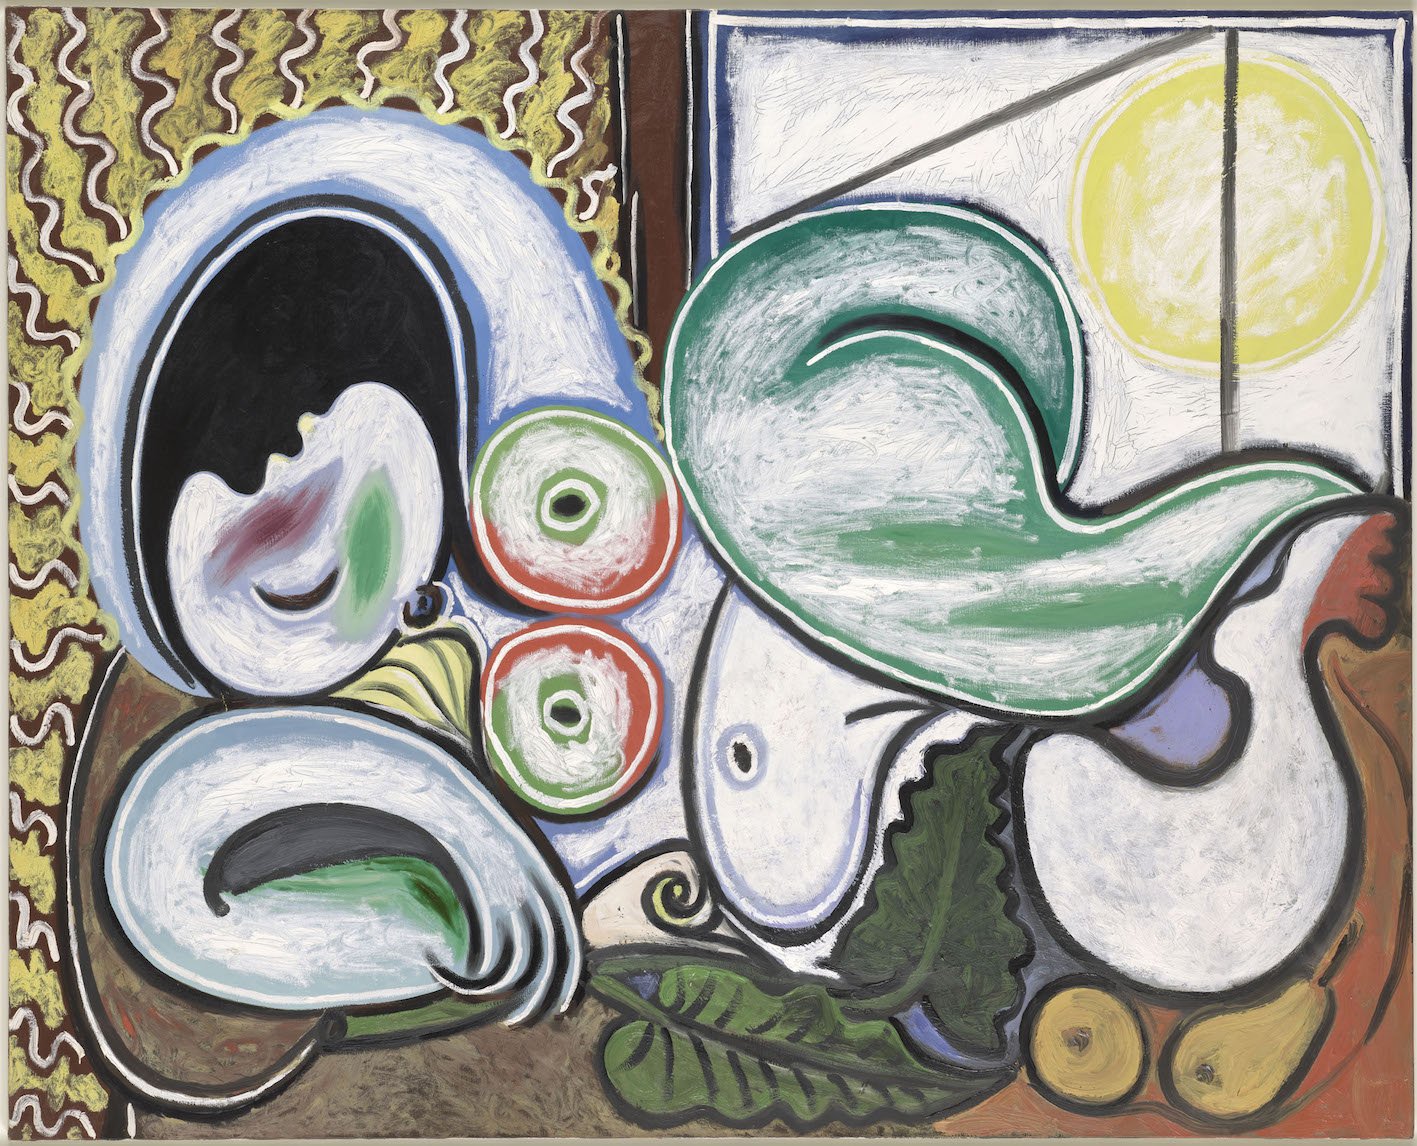 Pablo Picasso, Nudo sdraiato, 1932 olio su tela, 130x161,7 cm Paris, Musée National Picasso. Credito fotografico:© RMN-Grand Palais (Musée national Picasso-Paris) /Adrien Didierjean/ dist. Alinari